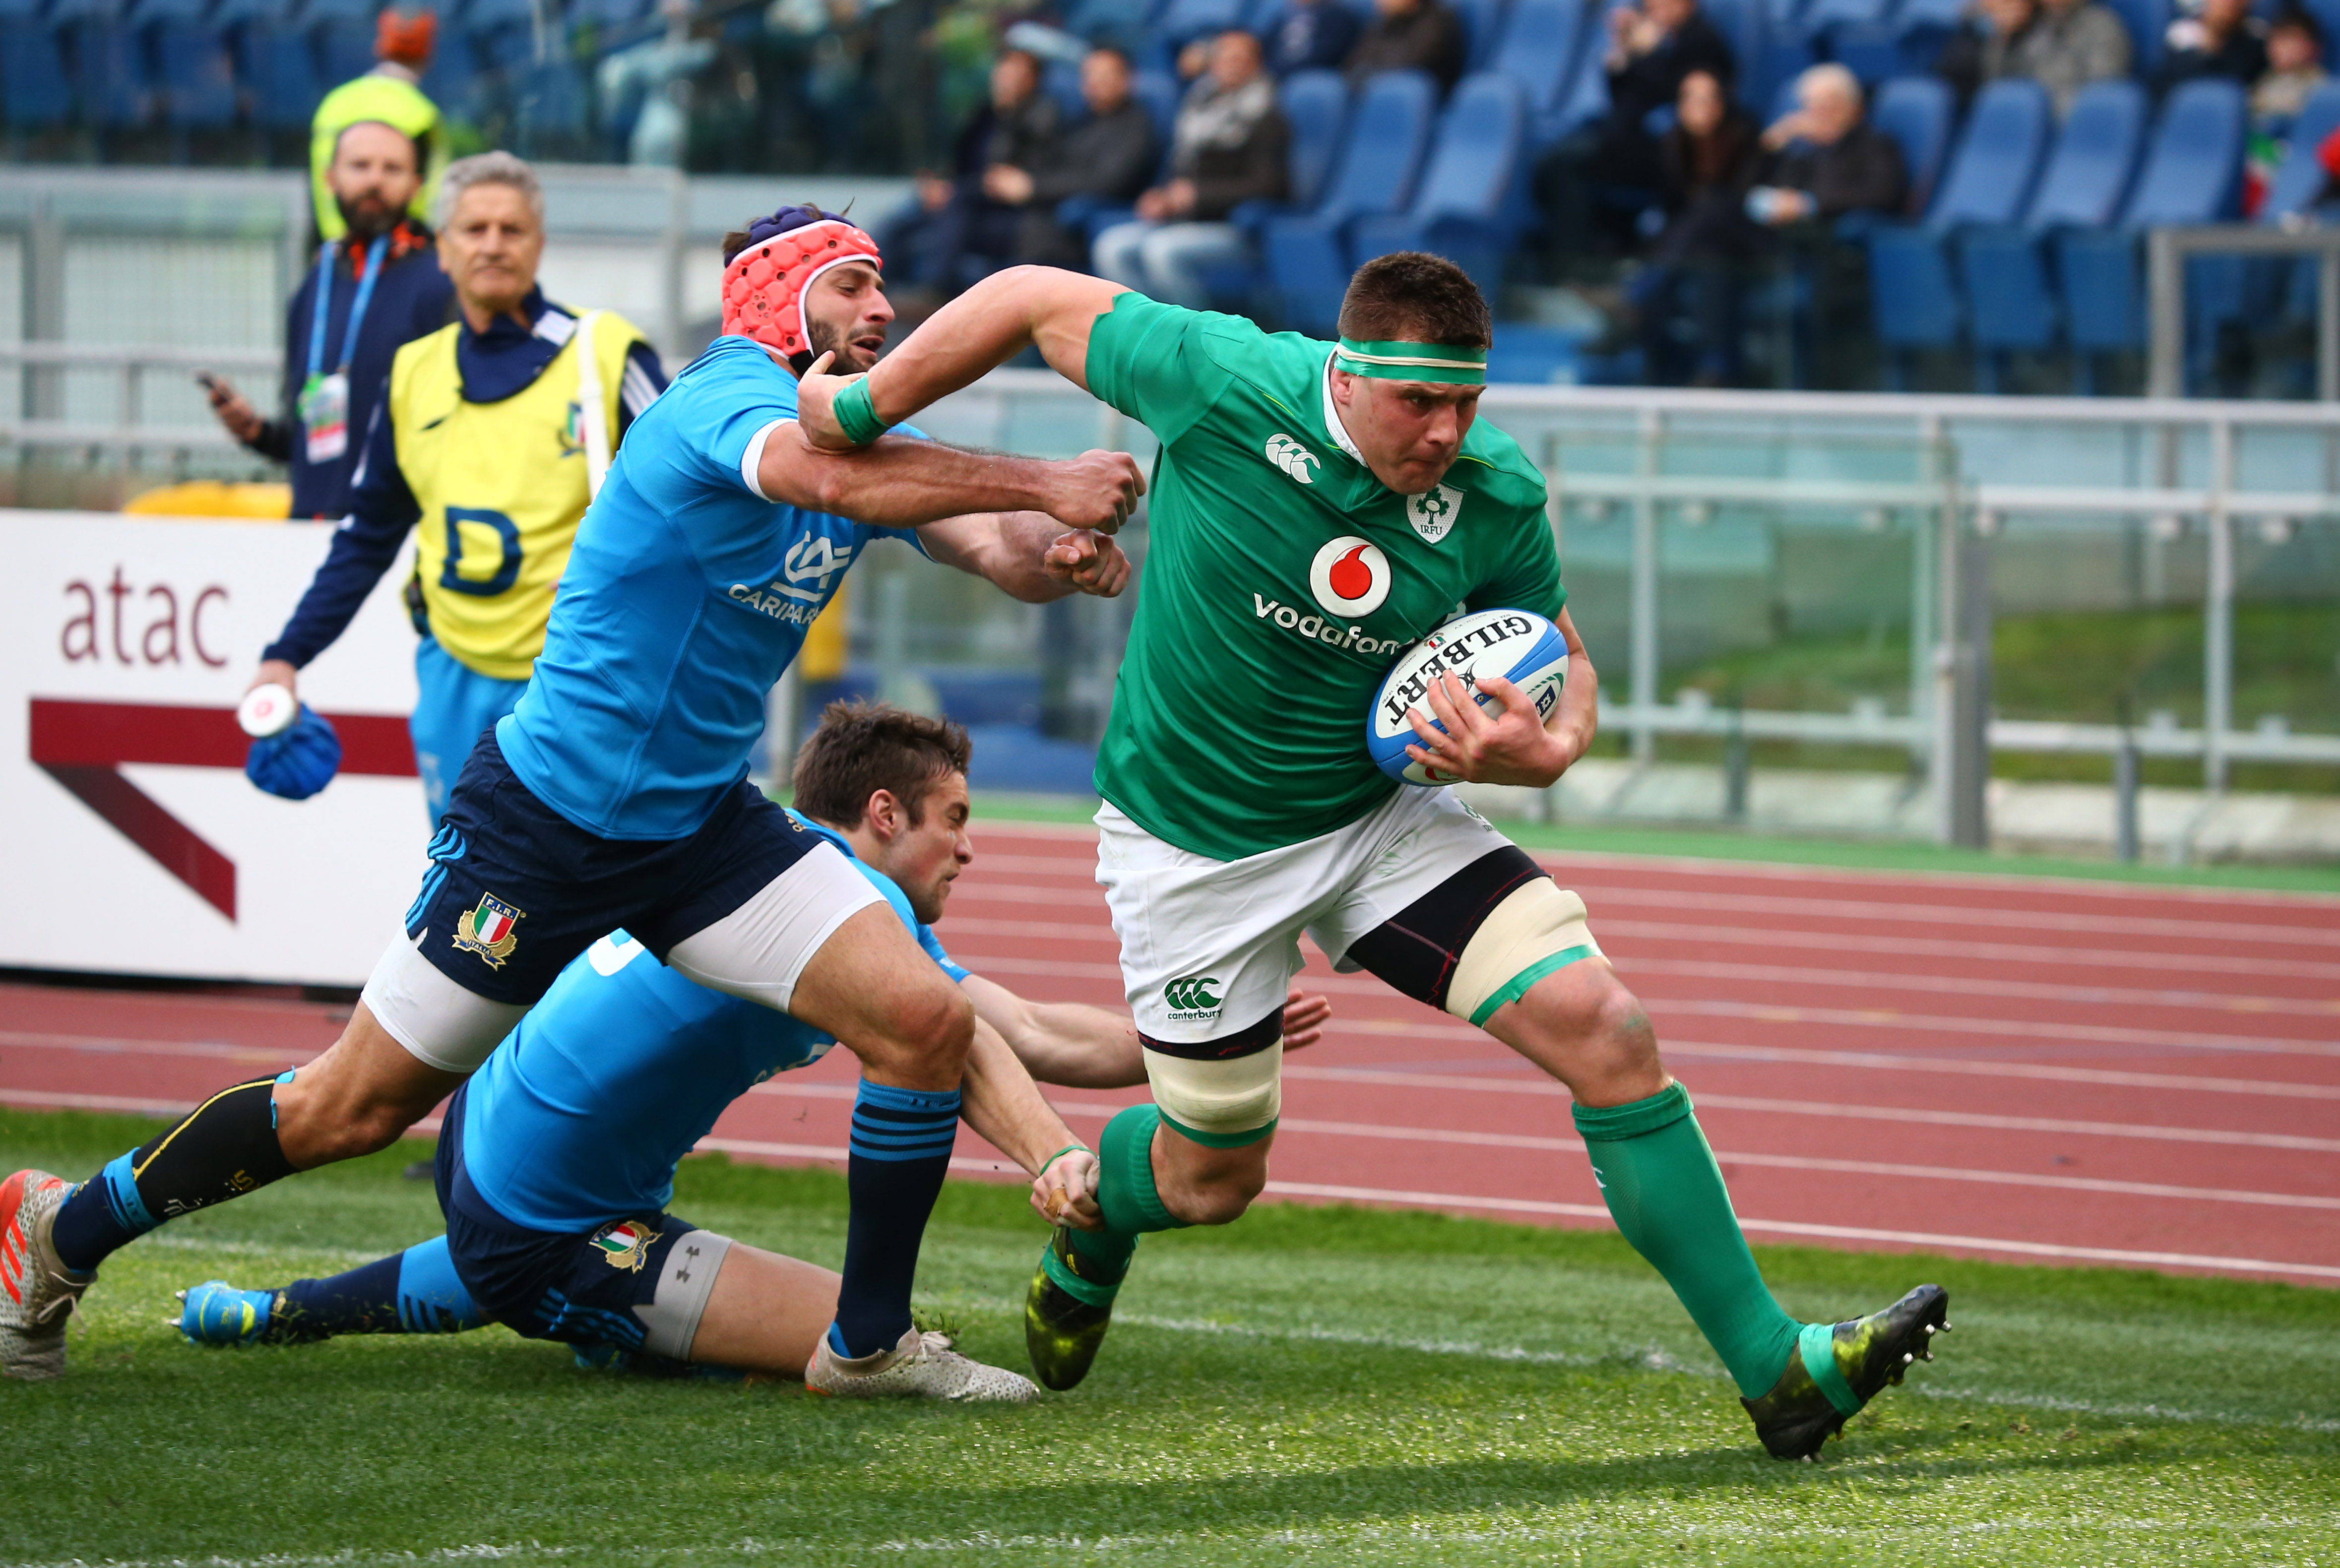 Rugby: Ireland crush Italy in bonus-point try fest